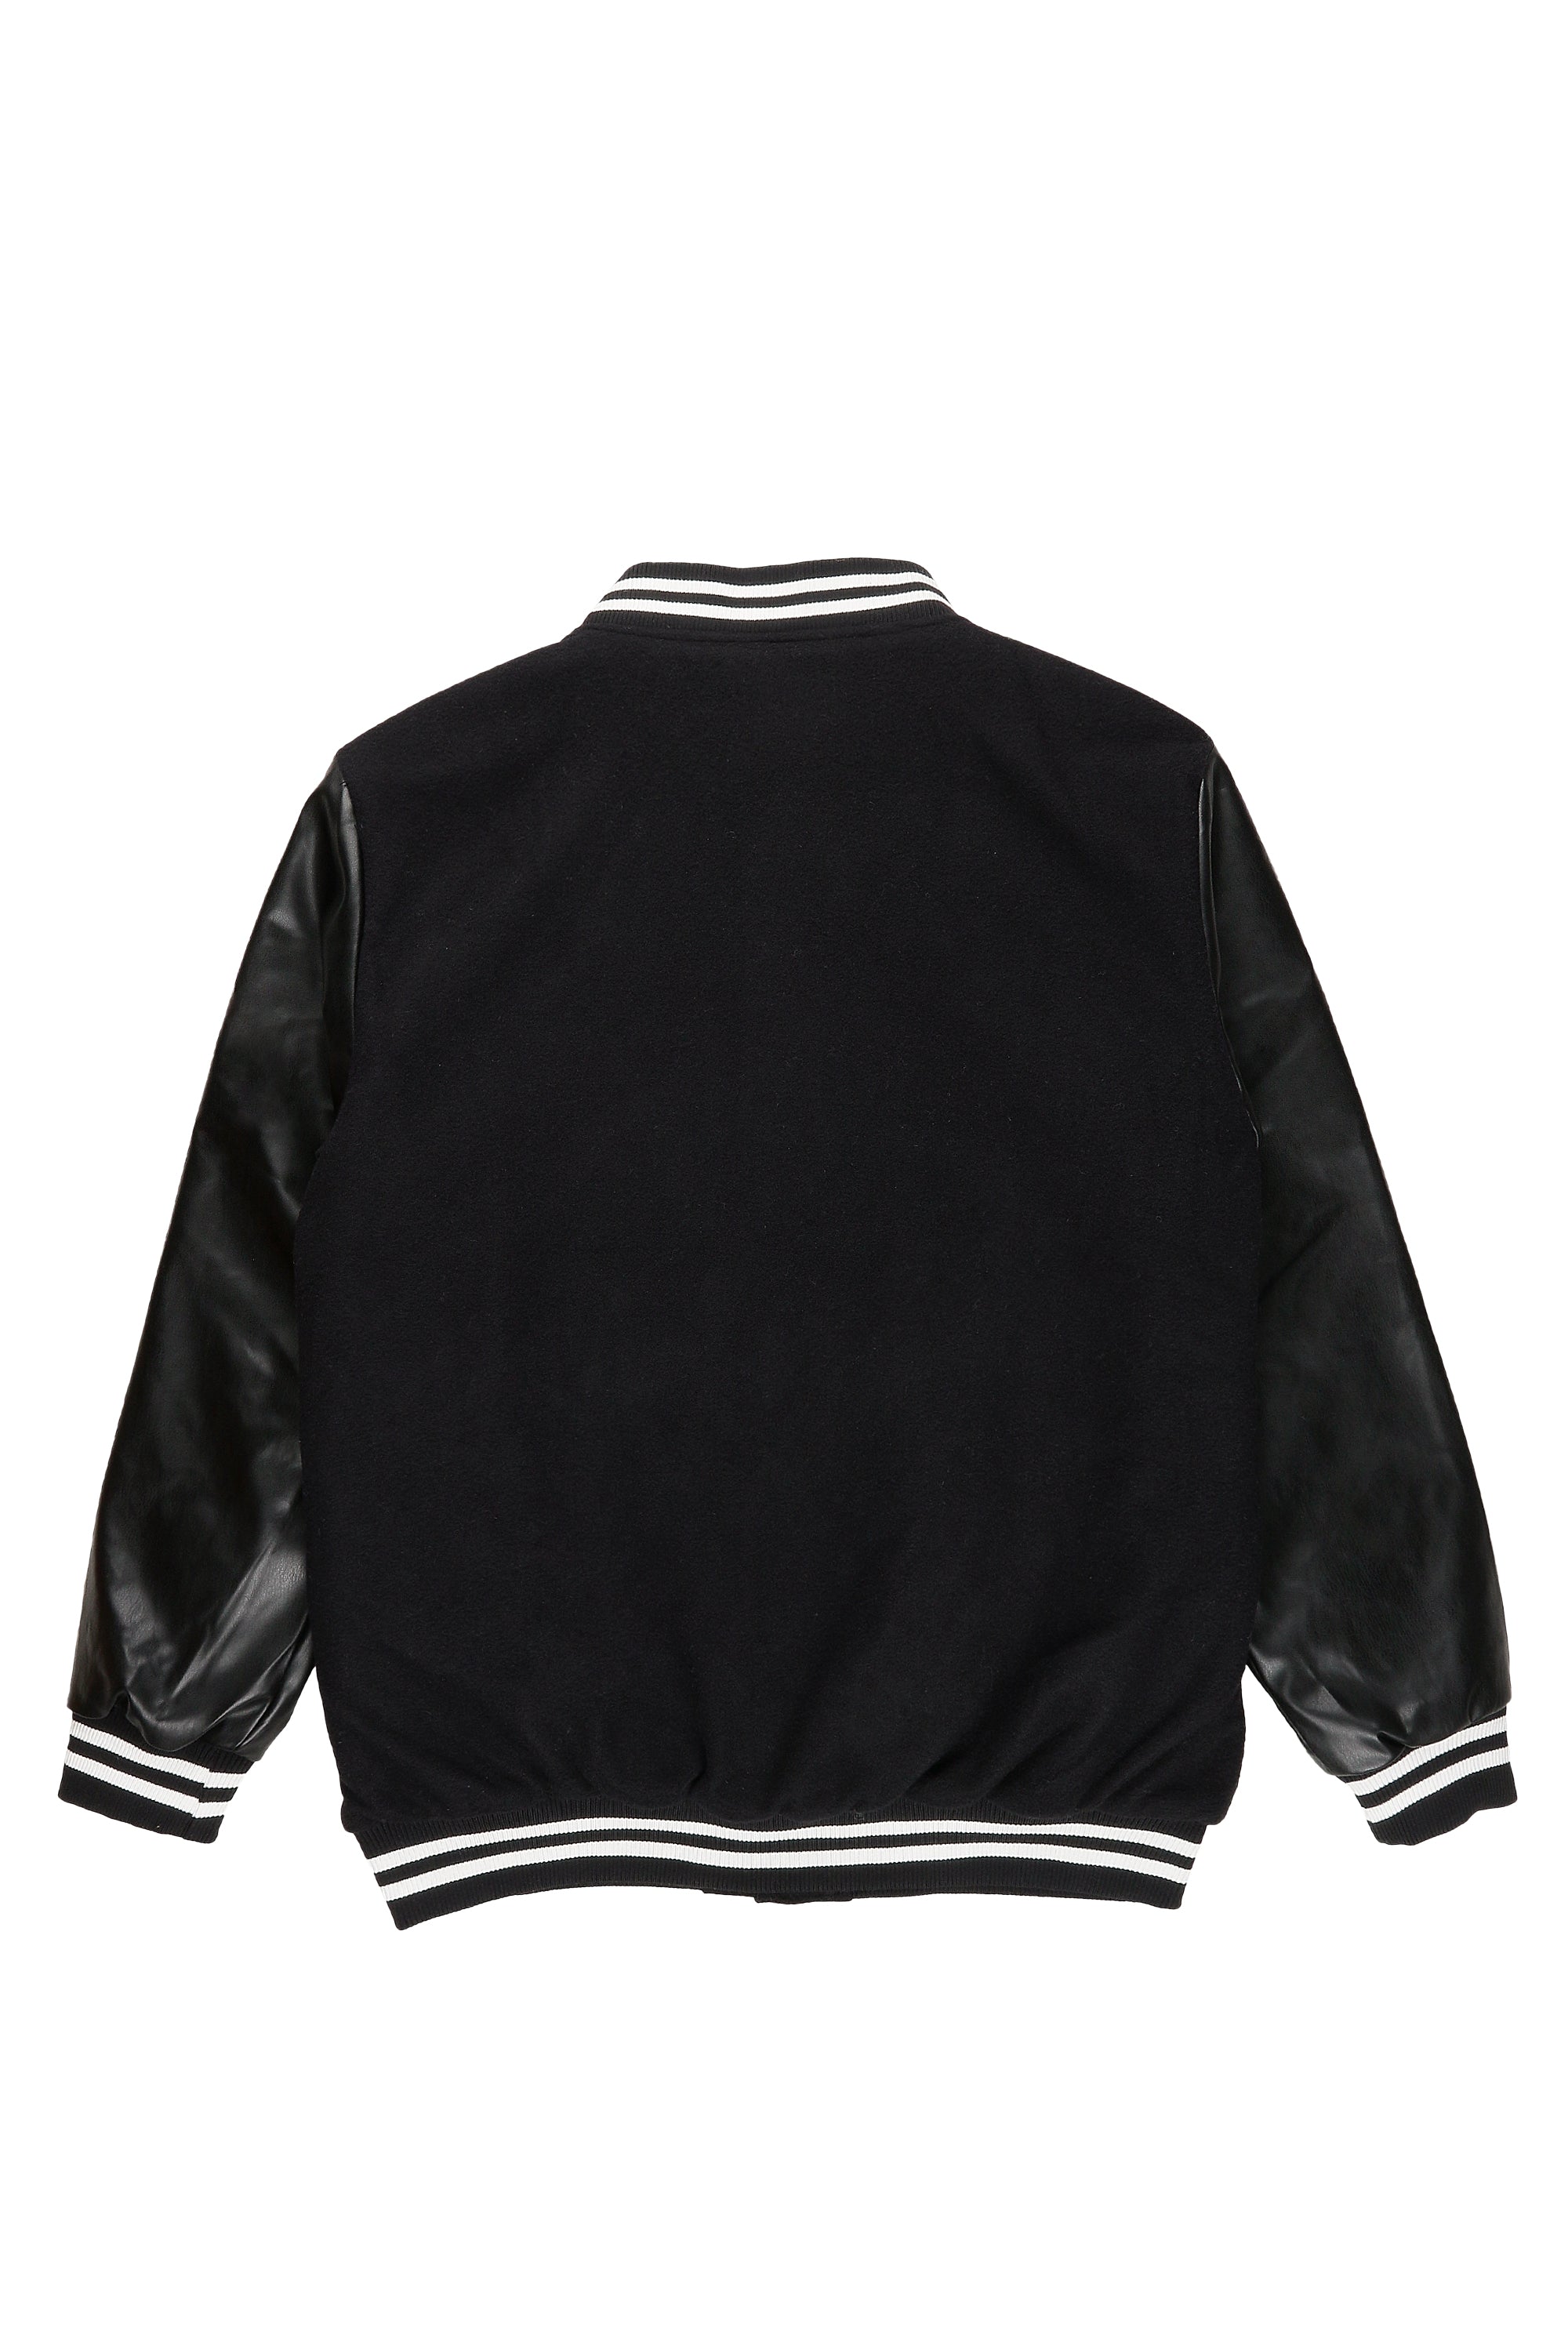 Boomer Black Varsity Jacket